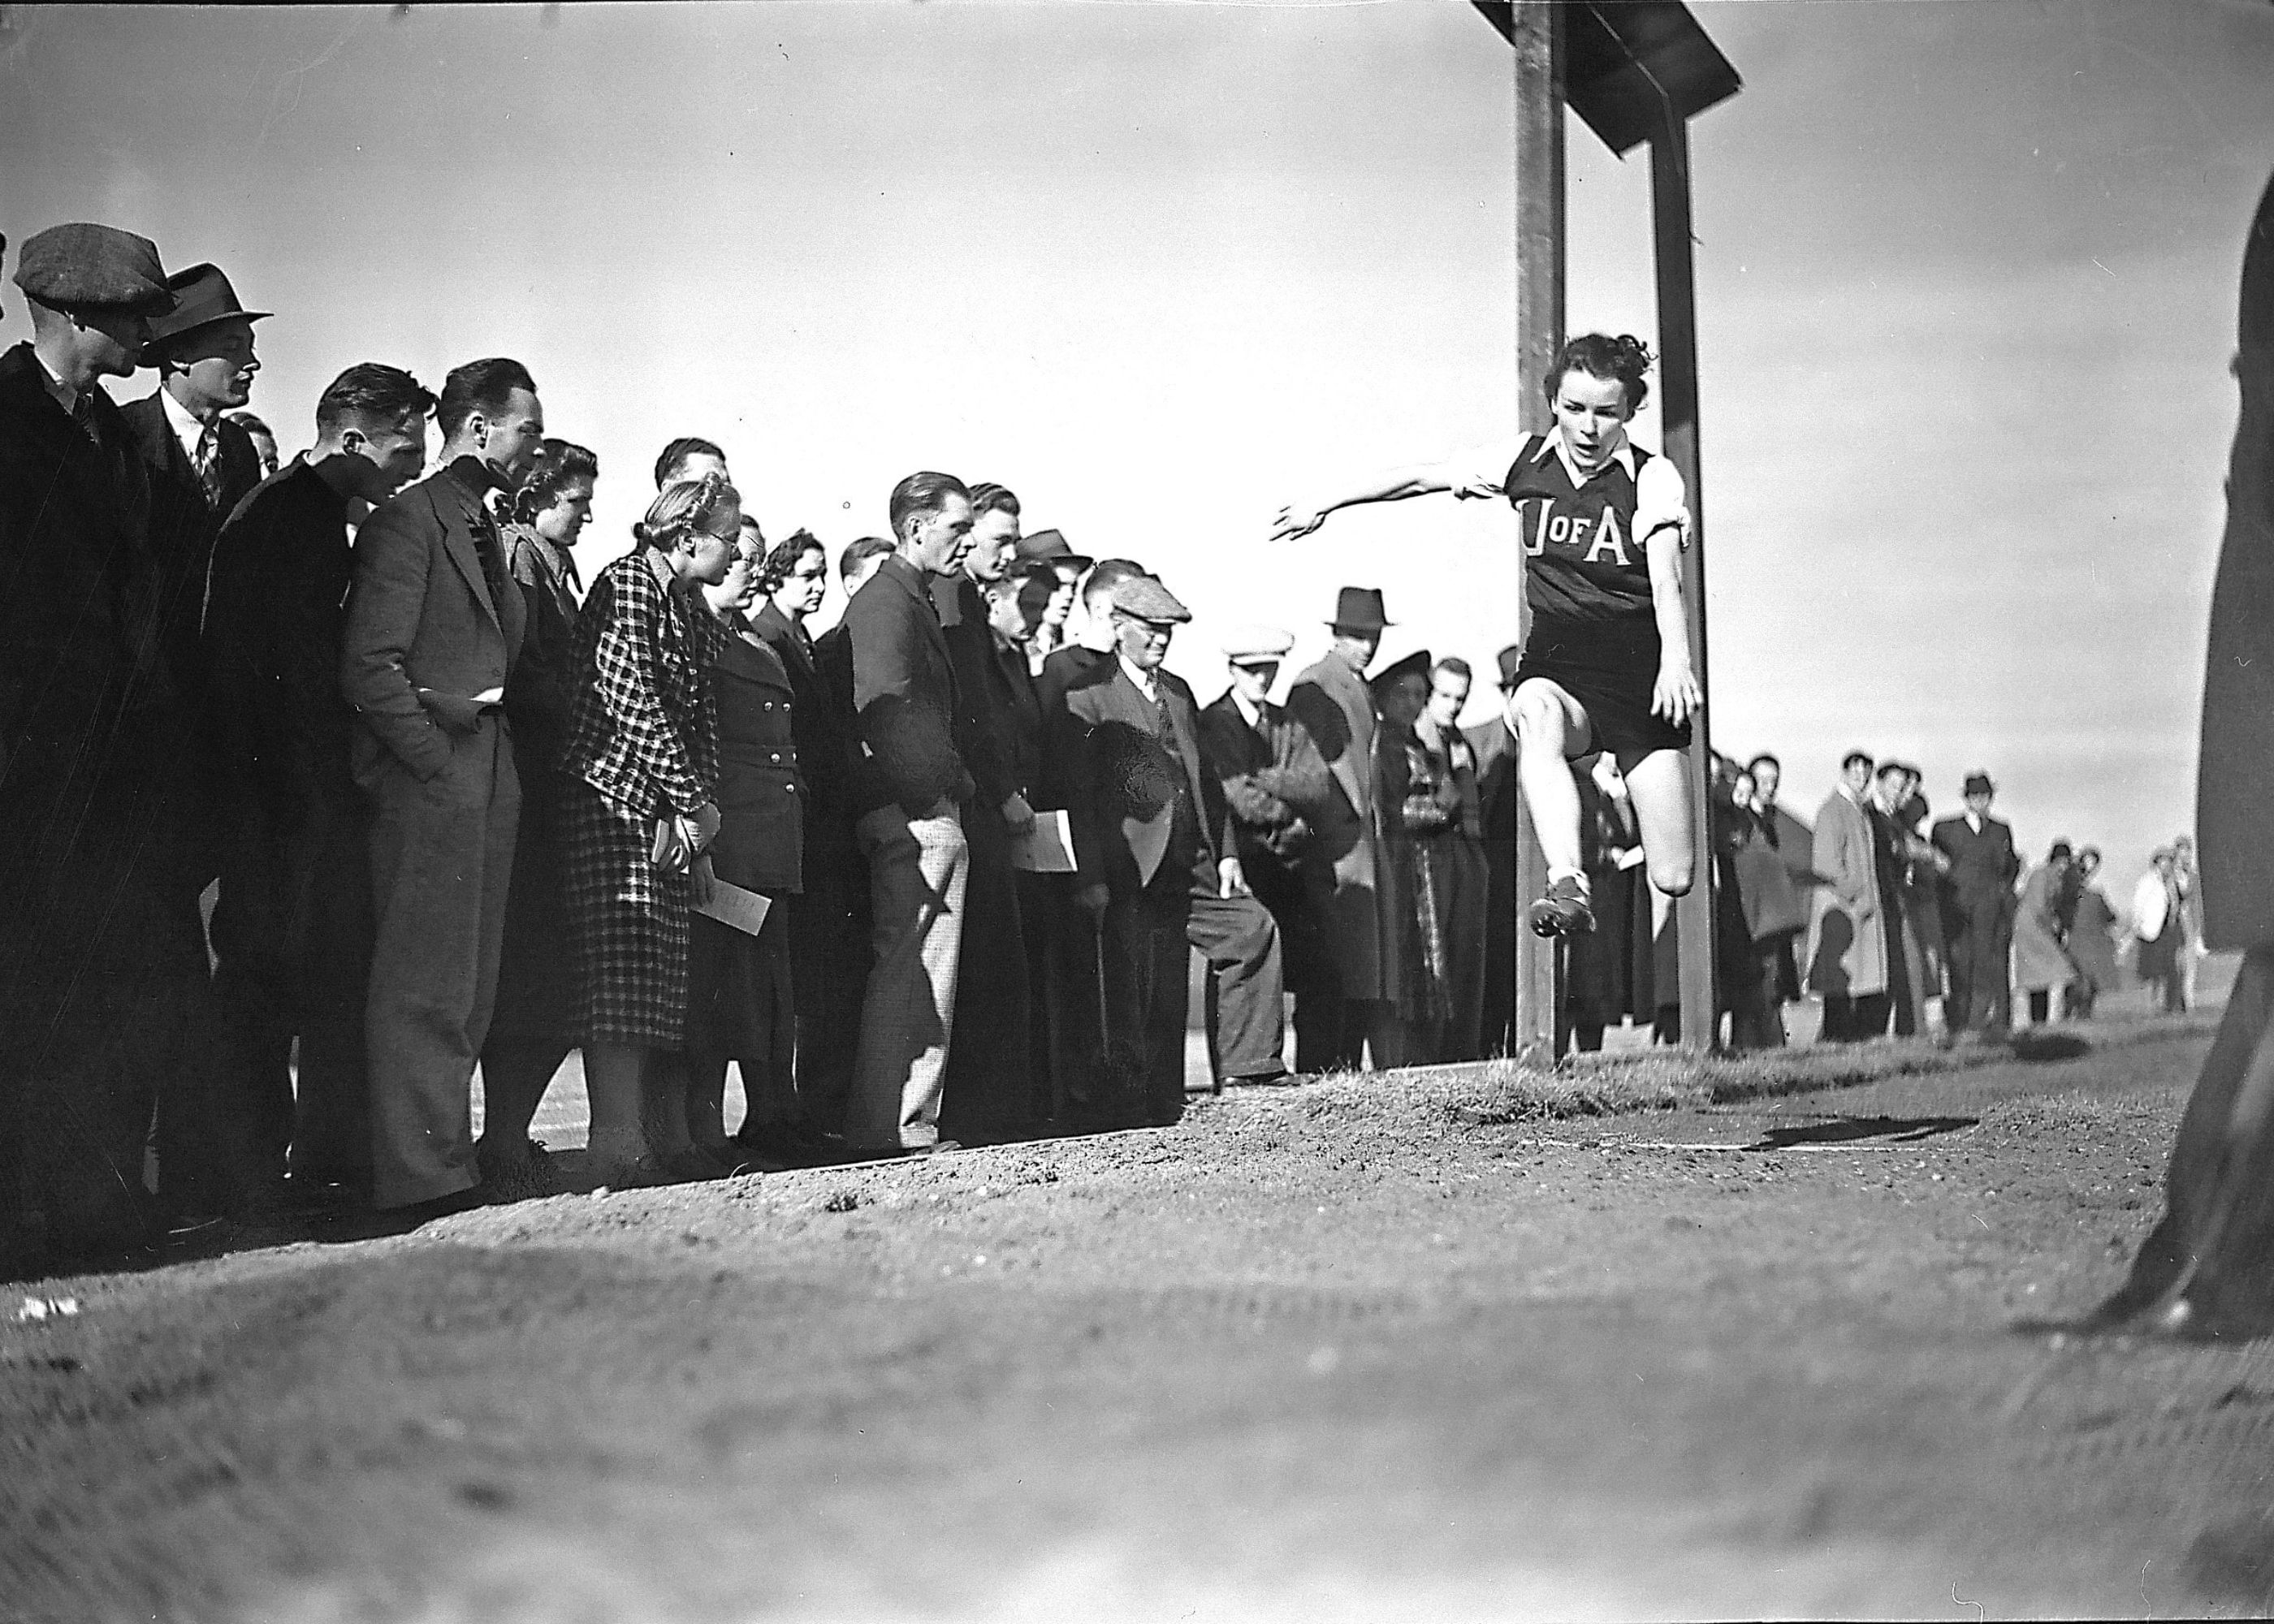 Intercollegiate Track Meet, Long Jump (October 1938)